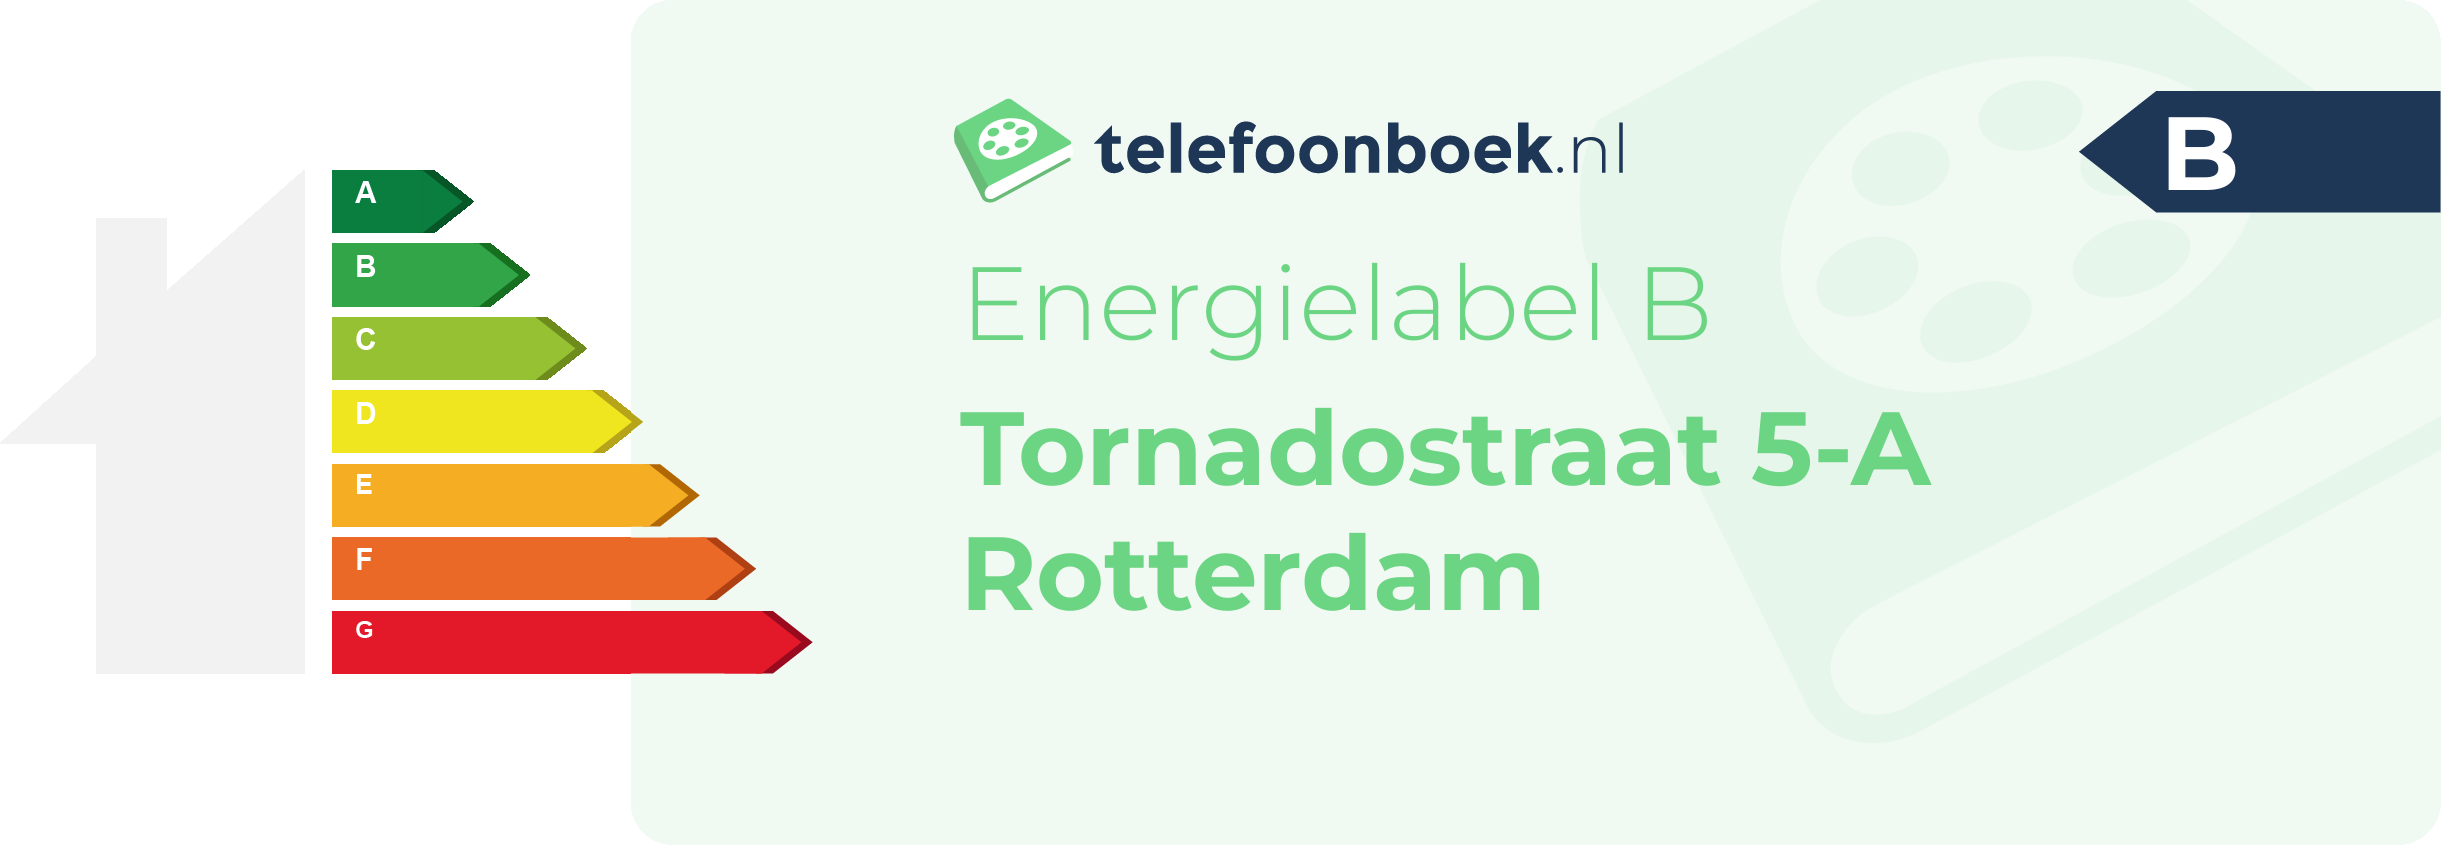 Energielabel Tornadostraat 5-A Rotterdam